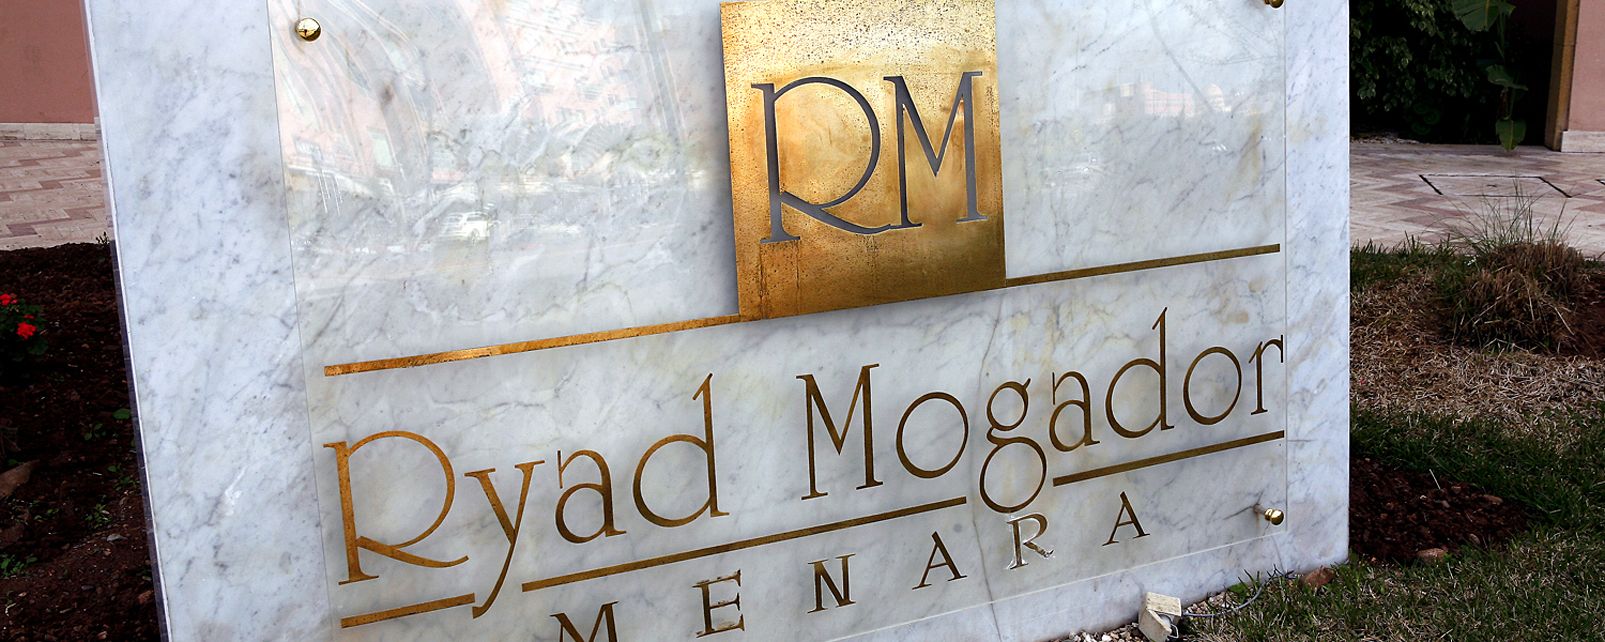 Hotel Ryad Mogador Ménara